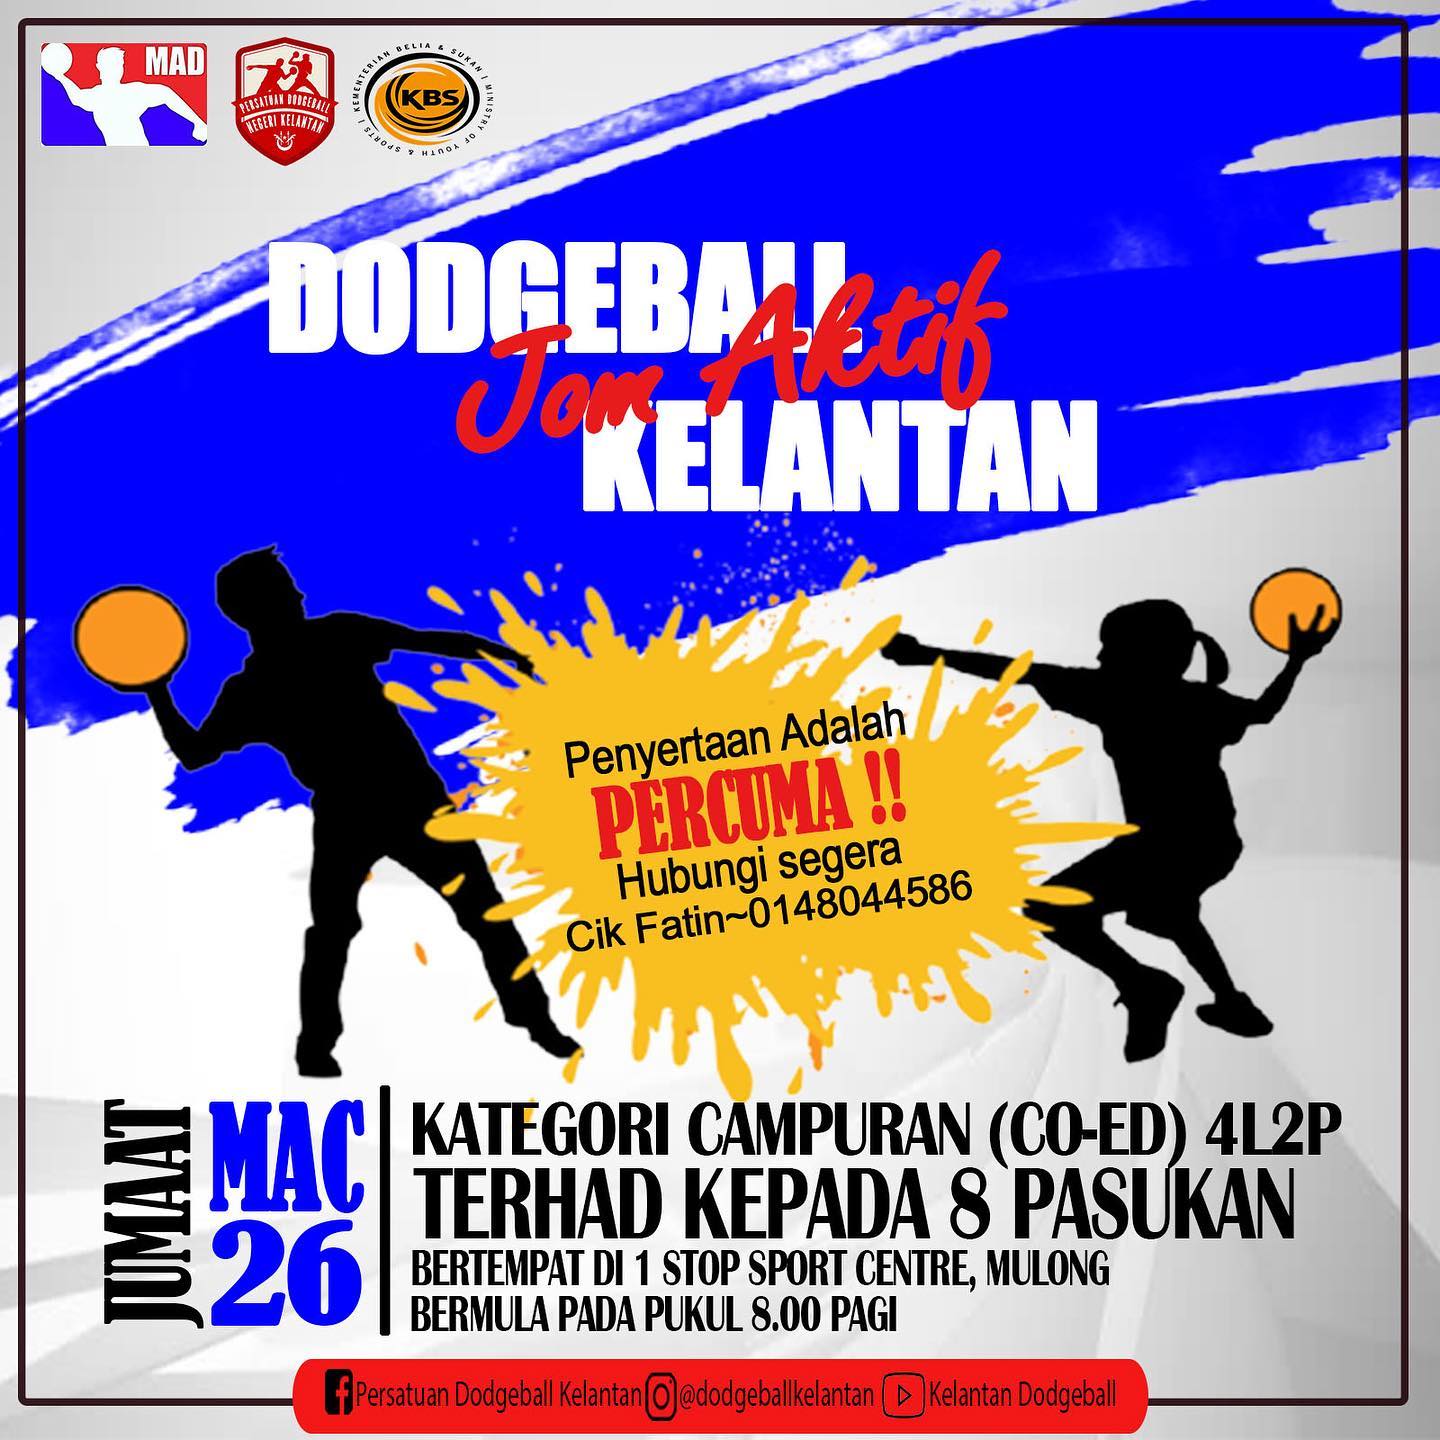 Attention To All Kelantan State Dodgeball Teams